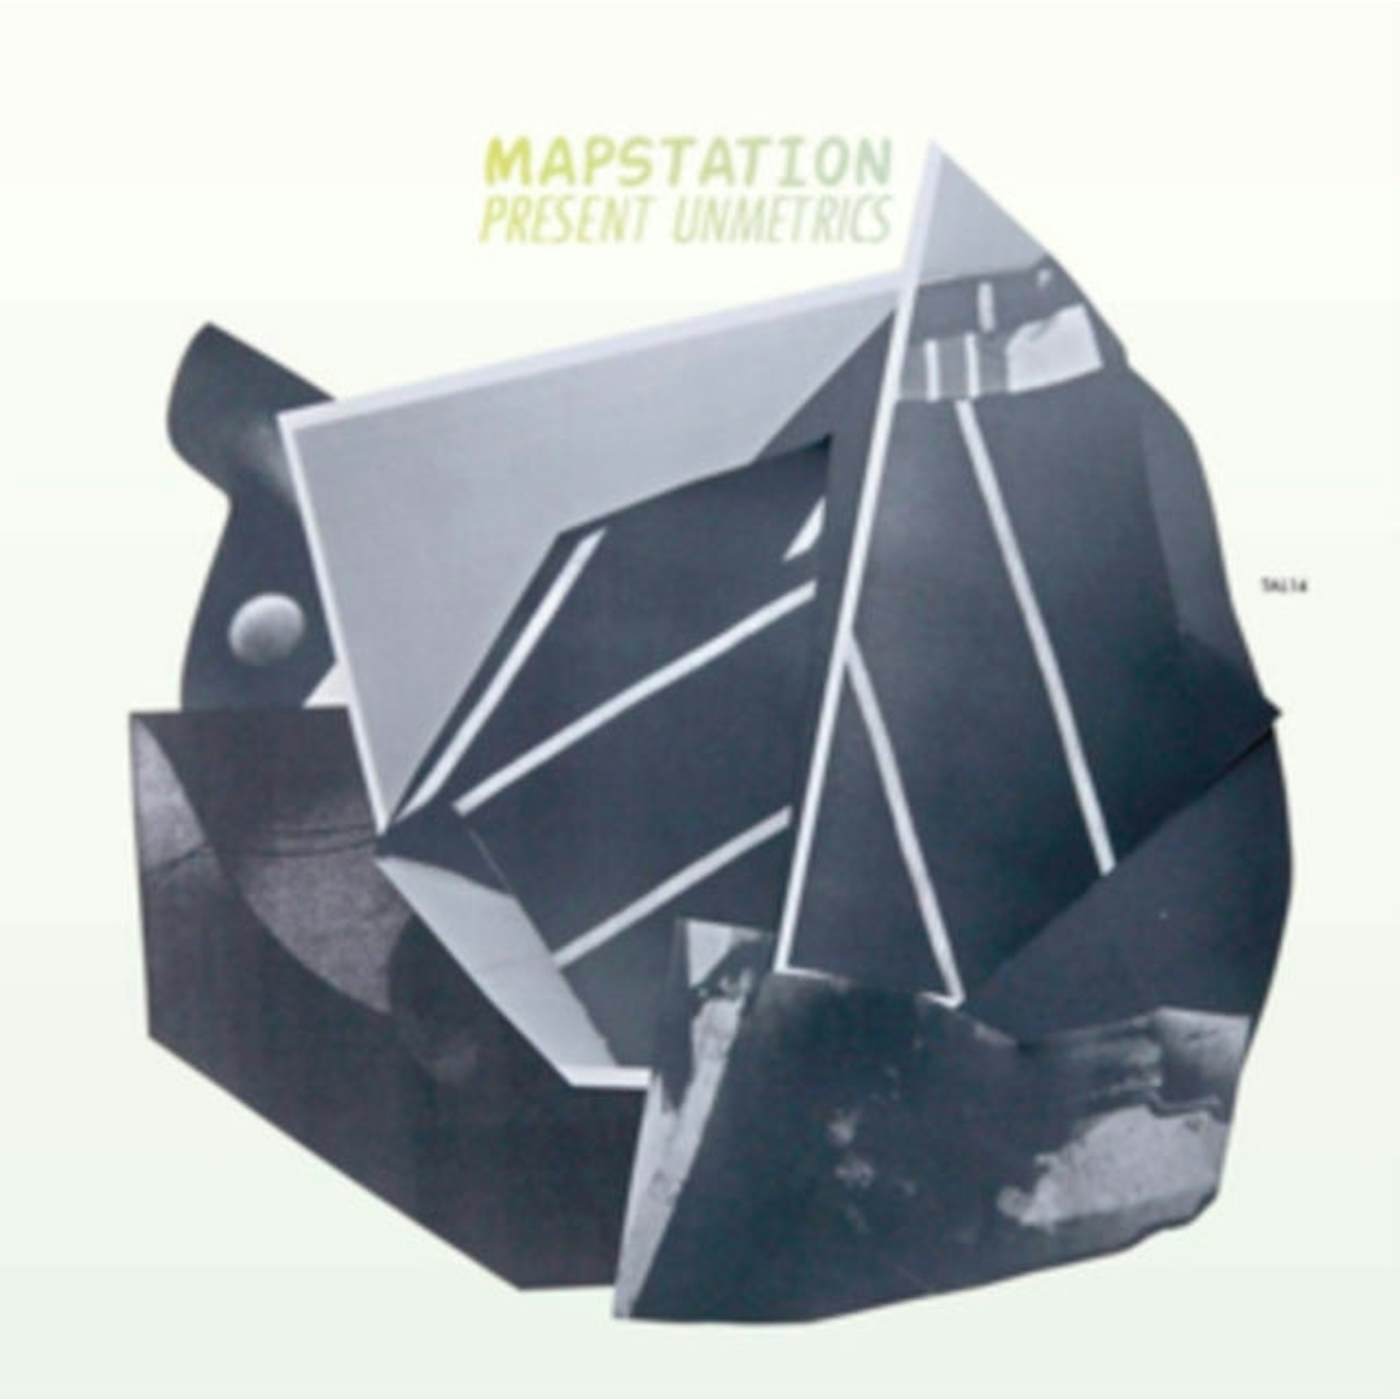 Mapstation LP - Present Unmetrics (Vinyl)